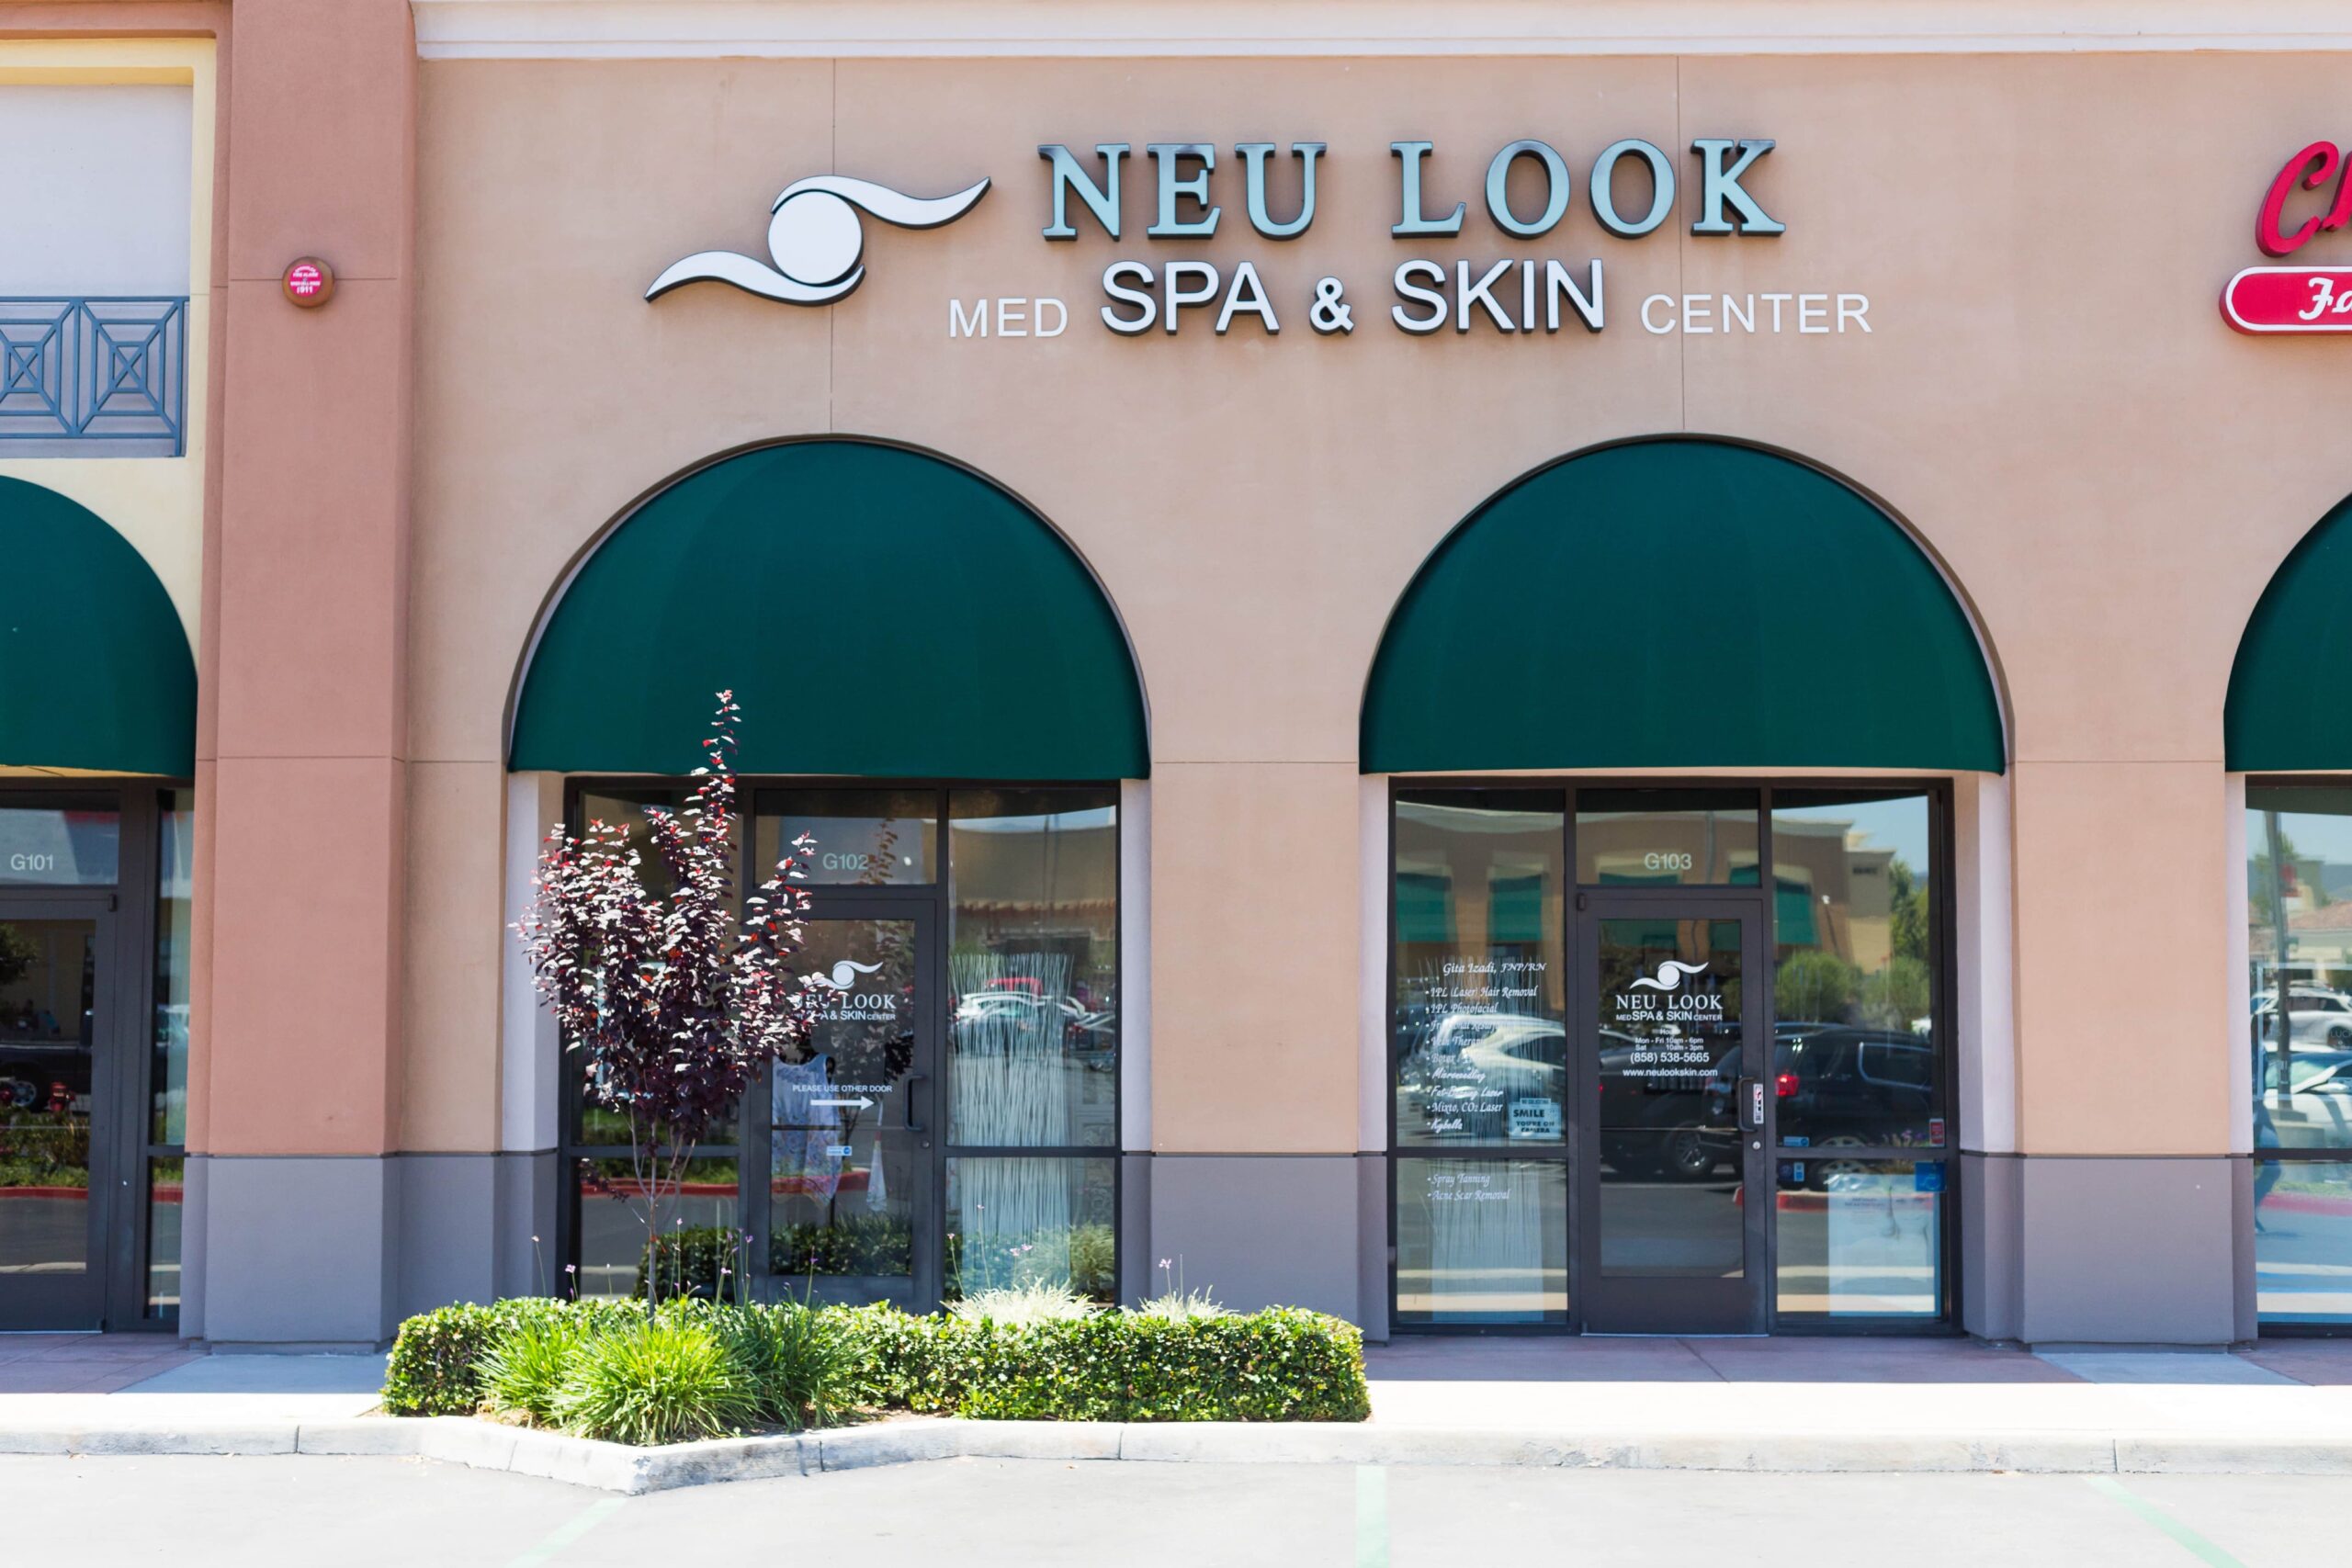 Neu Look Med Spa and Skin Center building